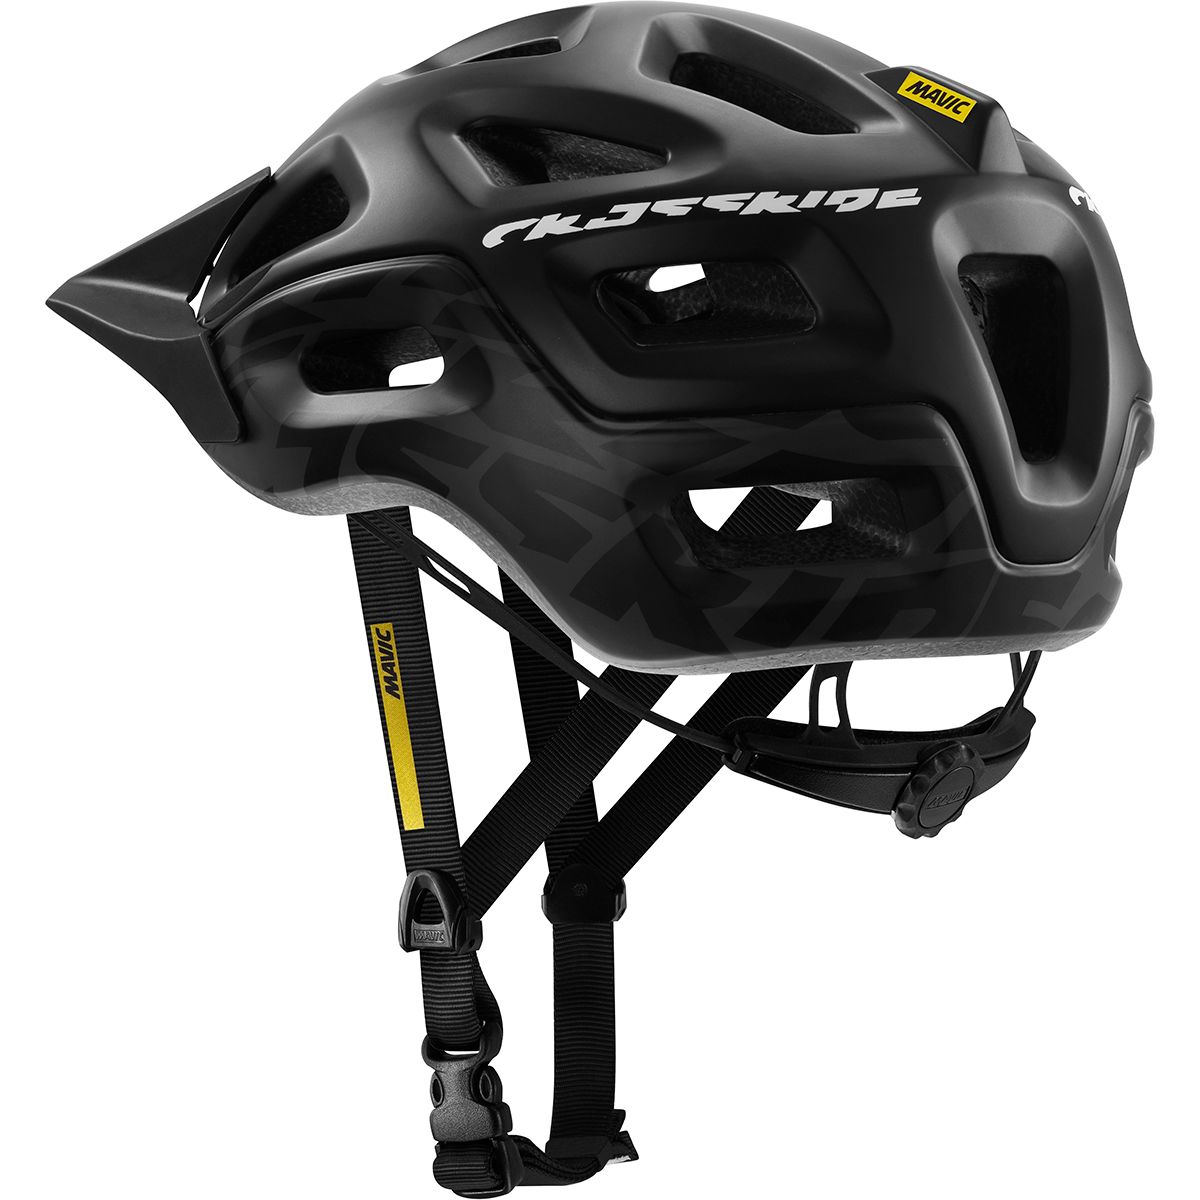 Mavic Crossride MTB Cycling Helmet Size Large Matte Black New 